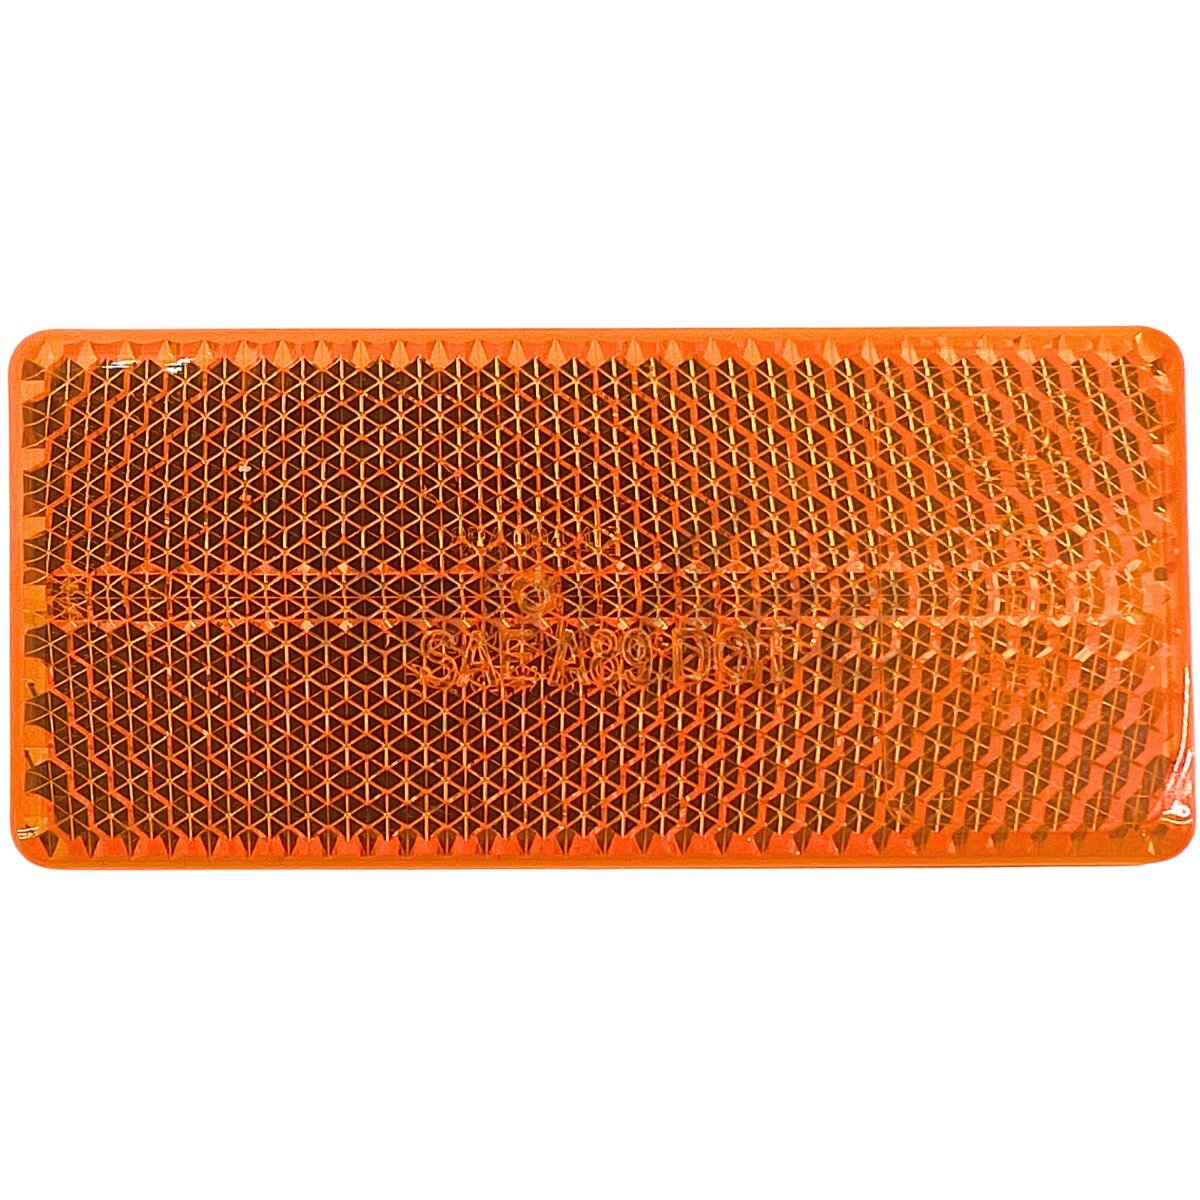 Reflektor 70x35mm, selbstklebend, Farbe: orange - italobee Shop, 3